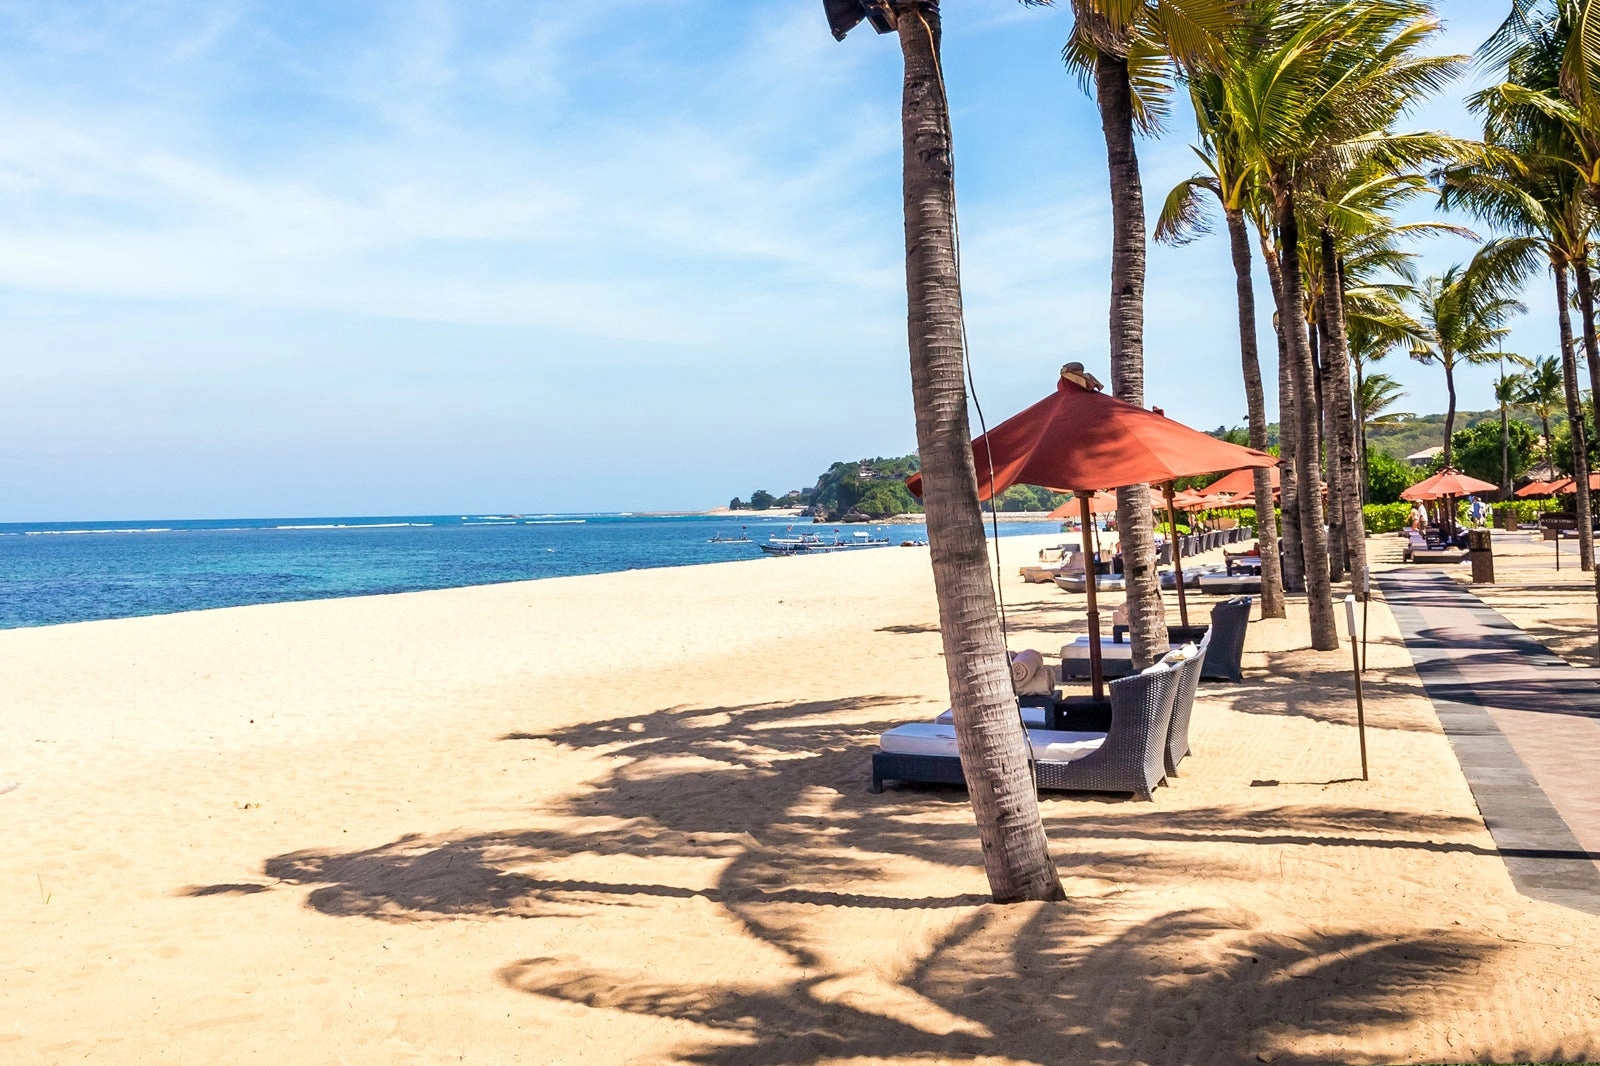  Geger  strand - Bali